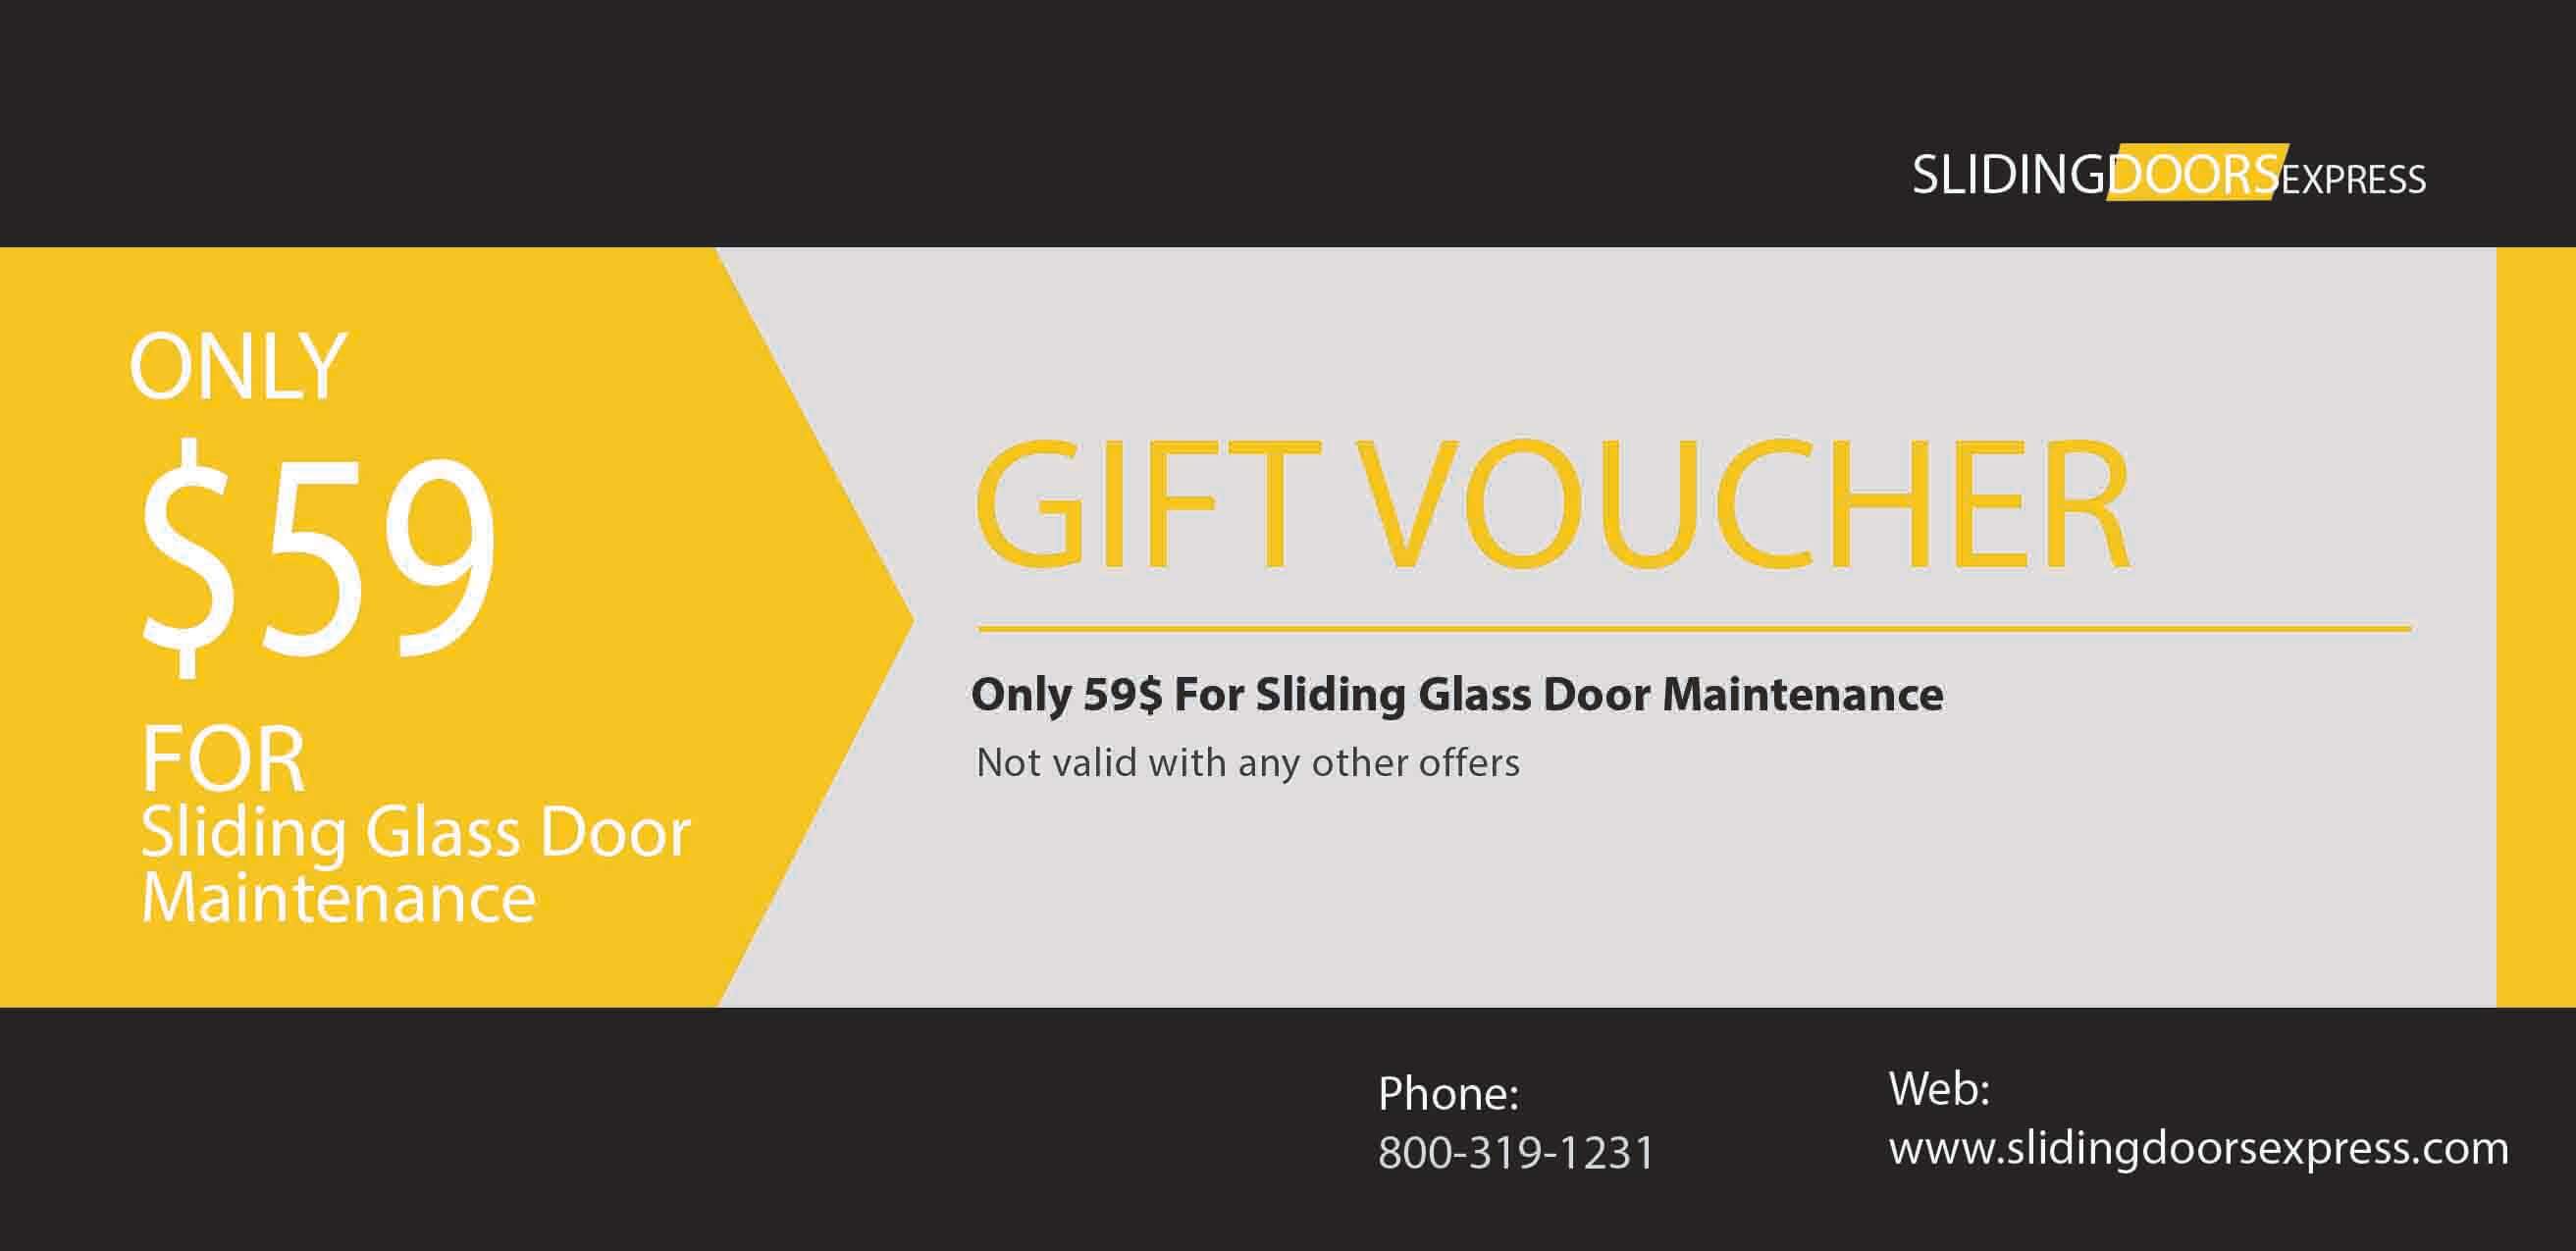 Sliding Glass Door - Gift Voucher